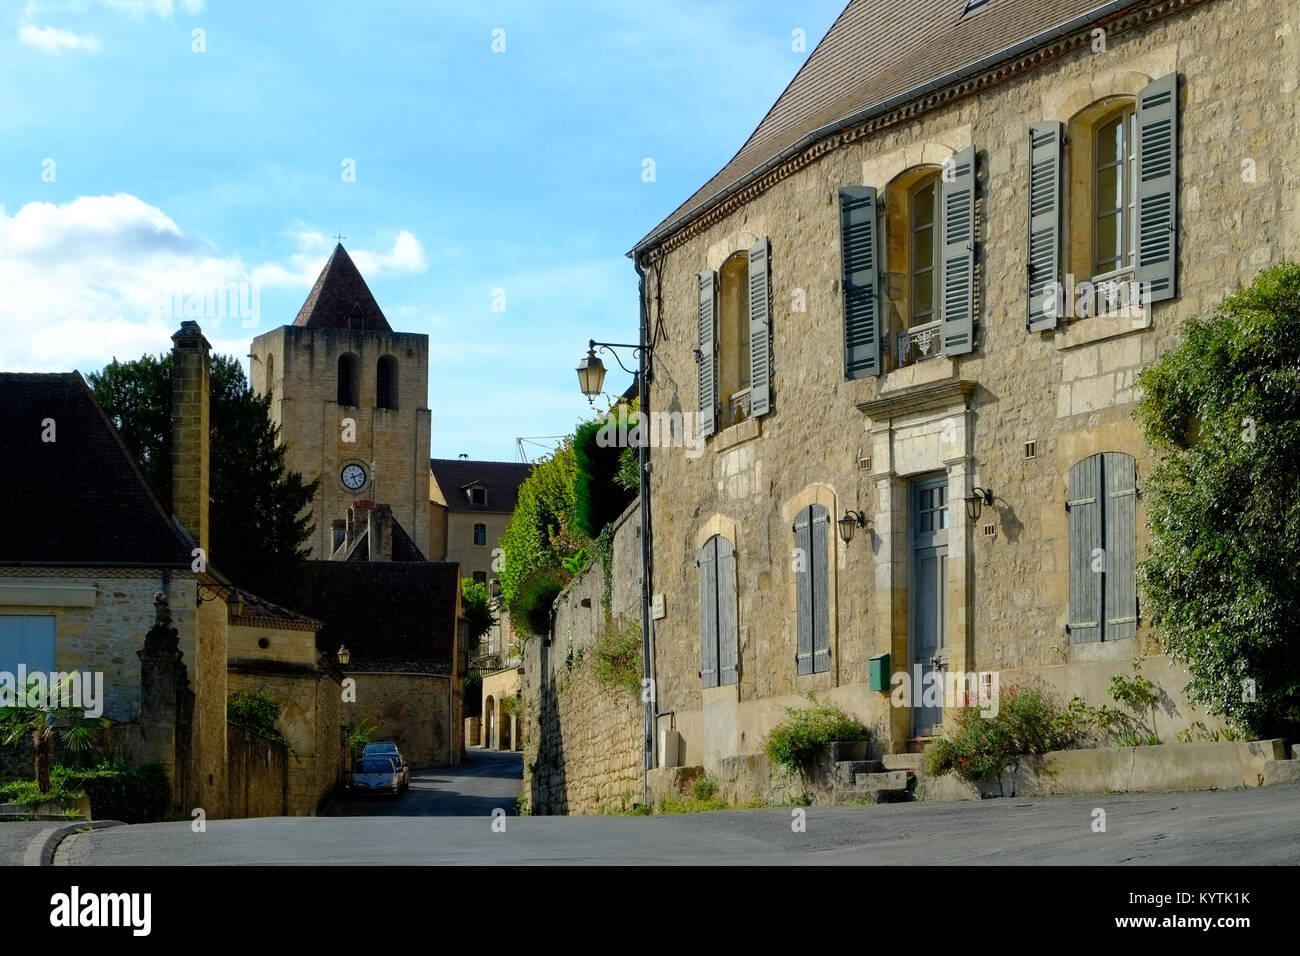 A quaint street scene in St Cyprien, Dordogne, Aquitane, France Stock Photo